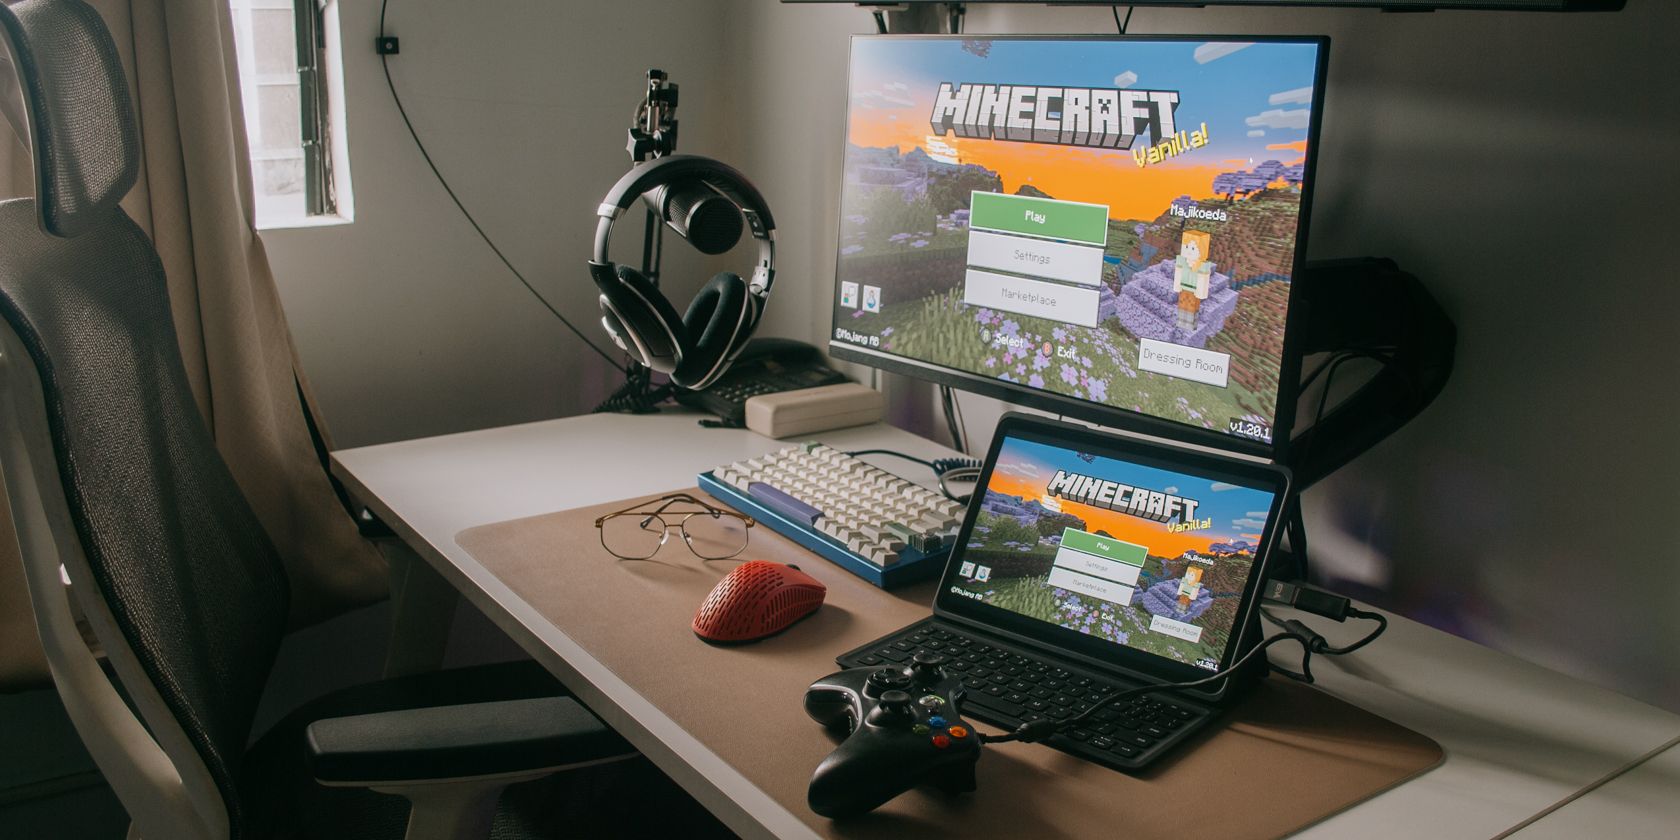 How to add Minecraft to Steam 